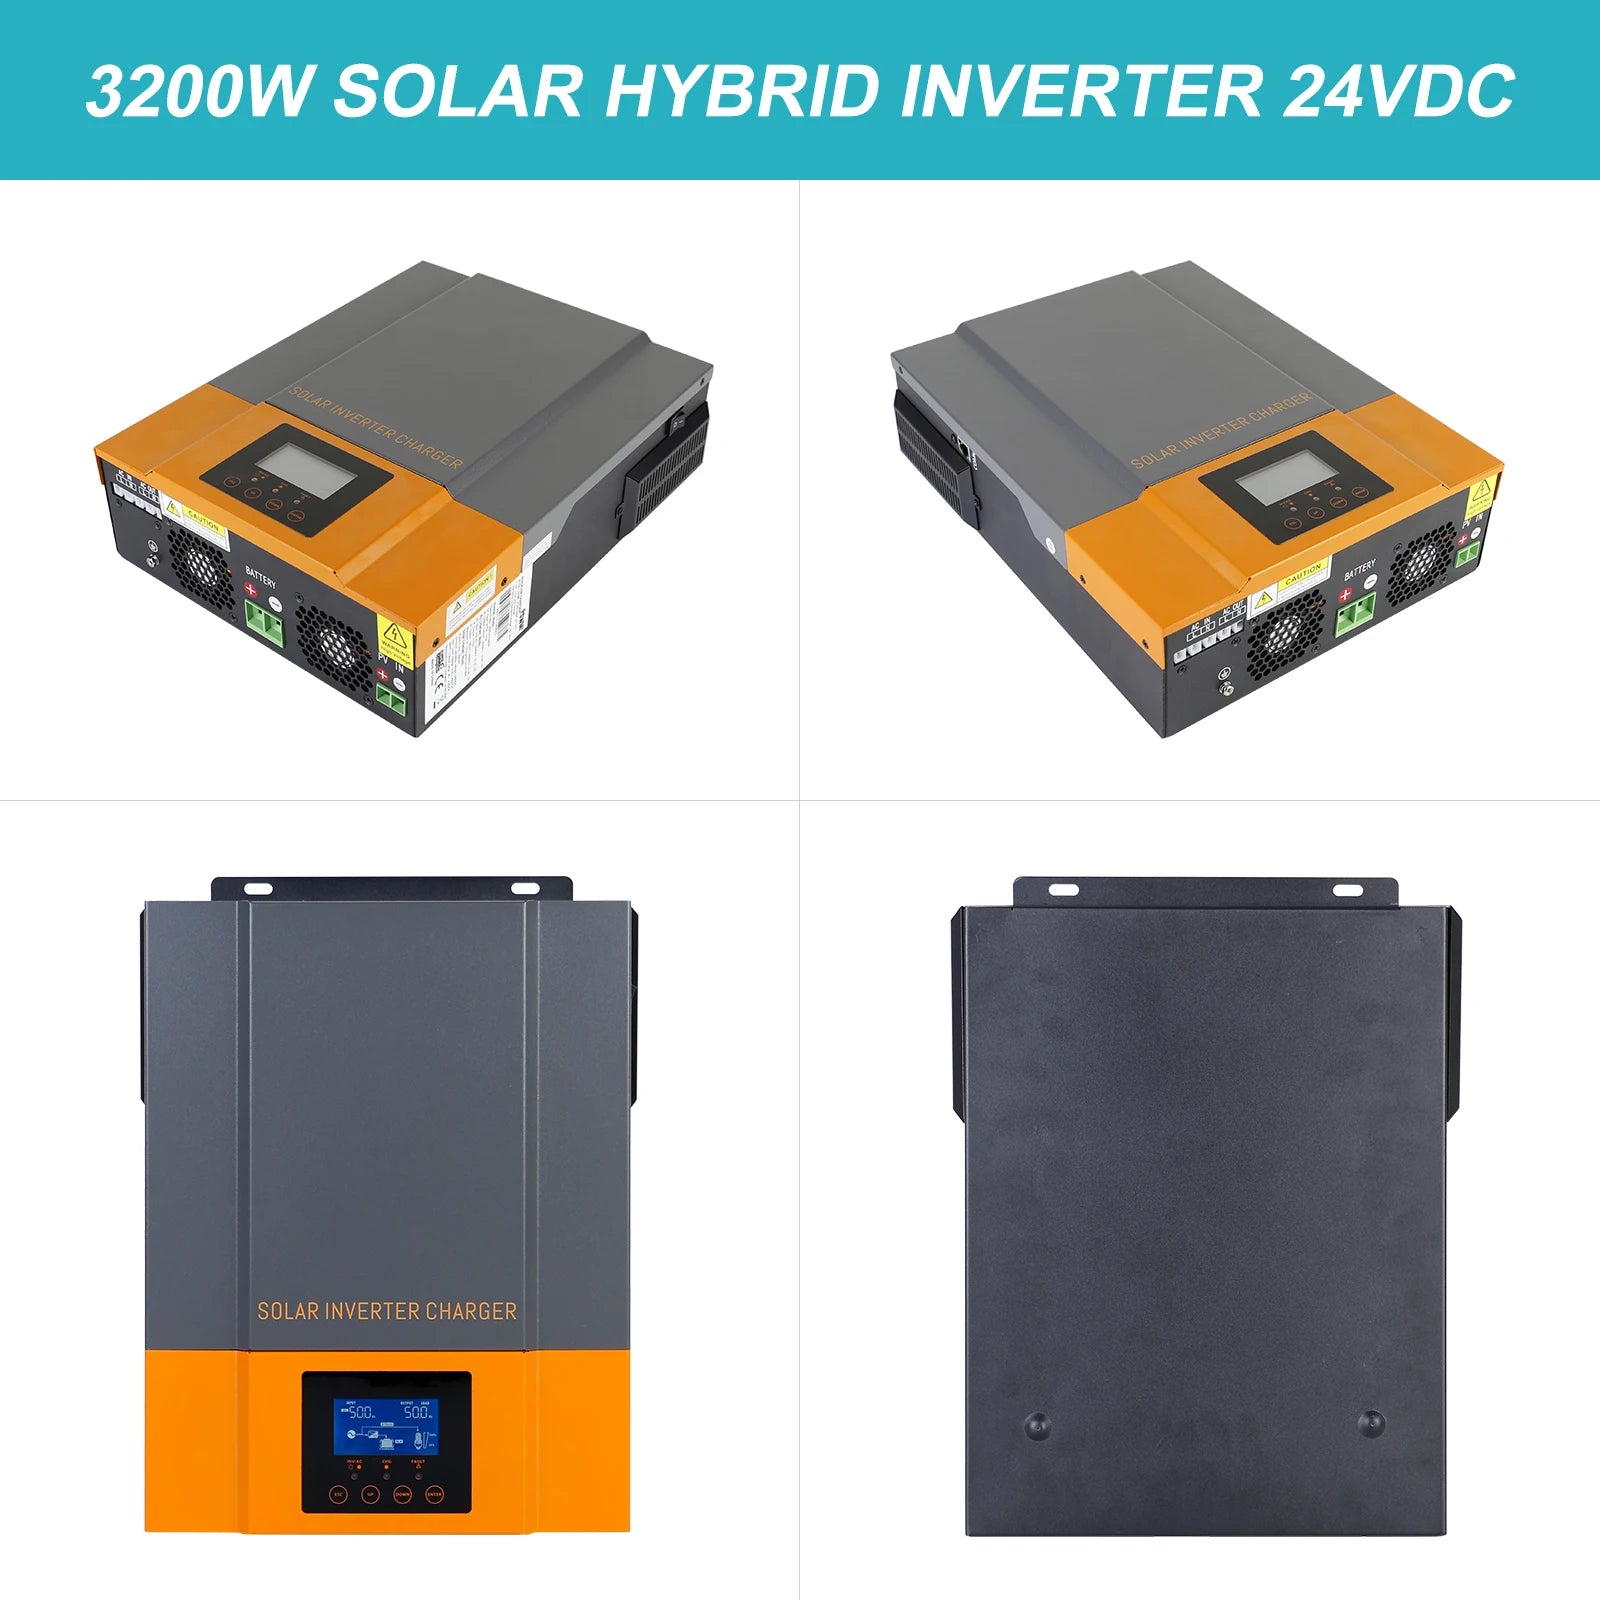 PowMr 1.5KW 2.4KW 3.2KW Hybrid Solar Inverter, Inverter charger for 12V/24V solar panels, supports 80A charging and MPPT tech.